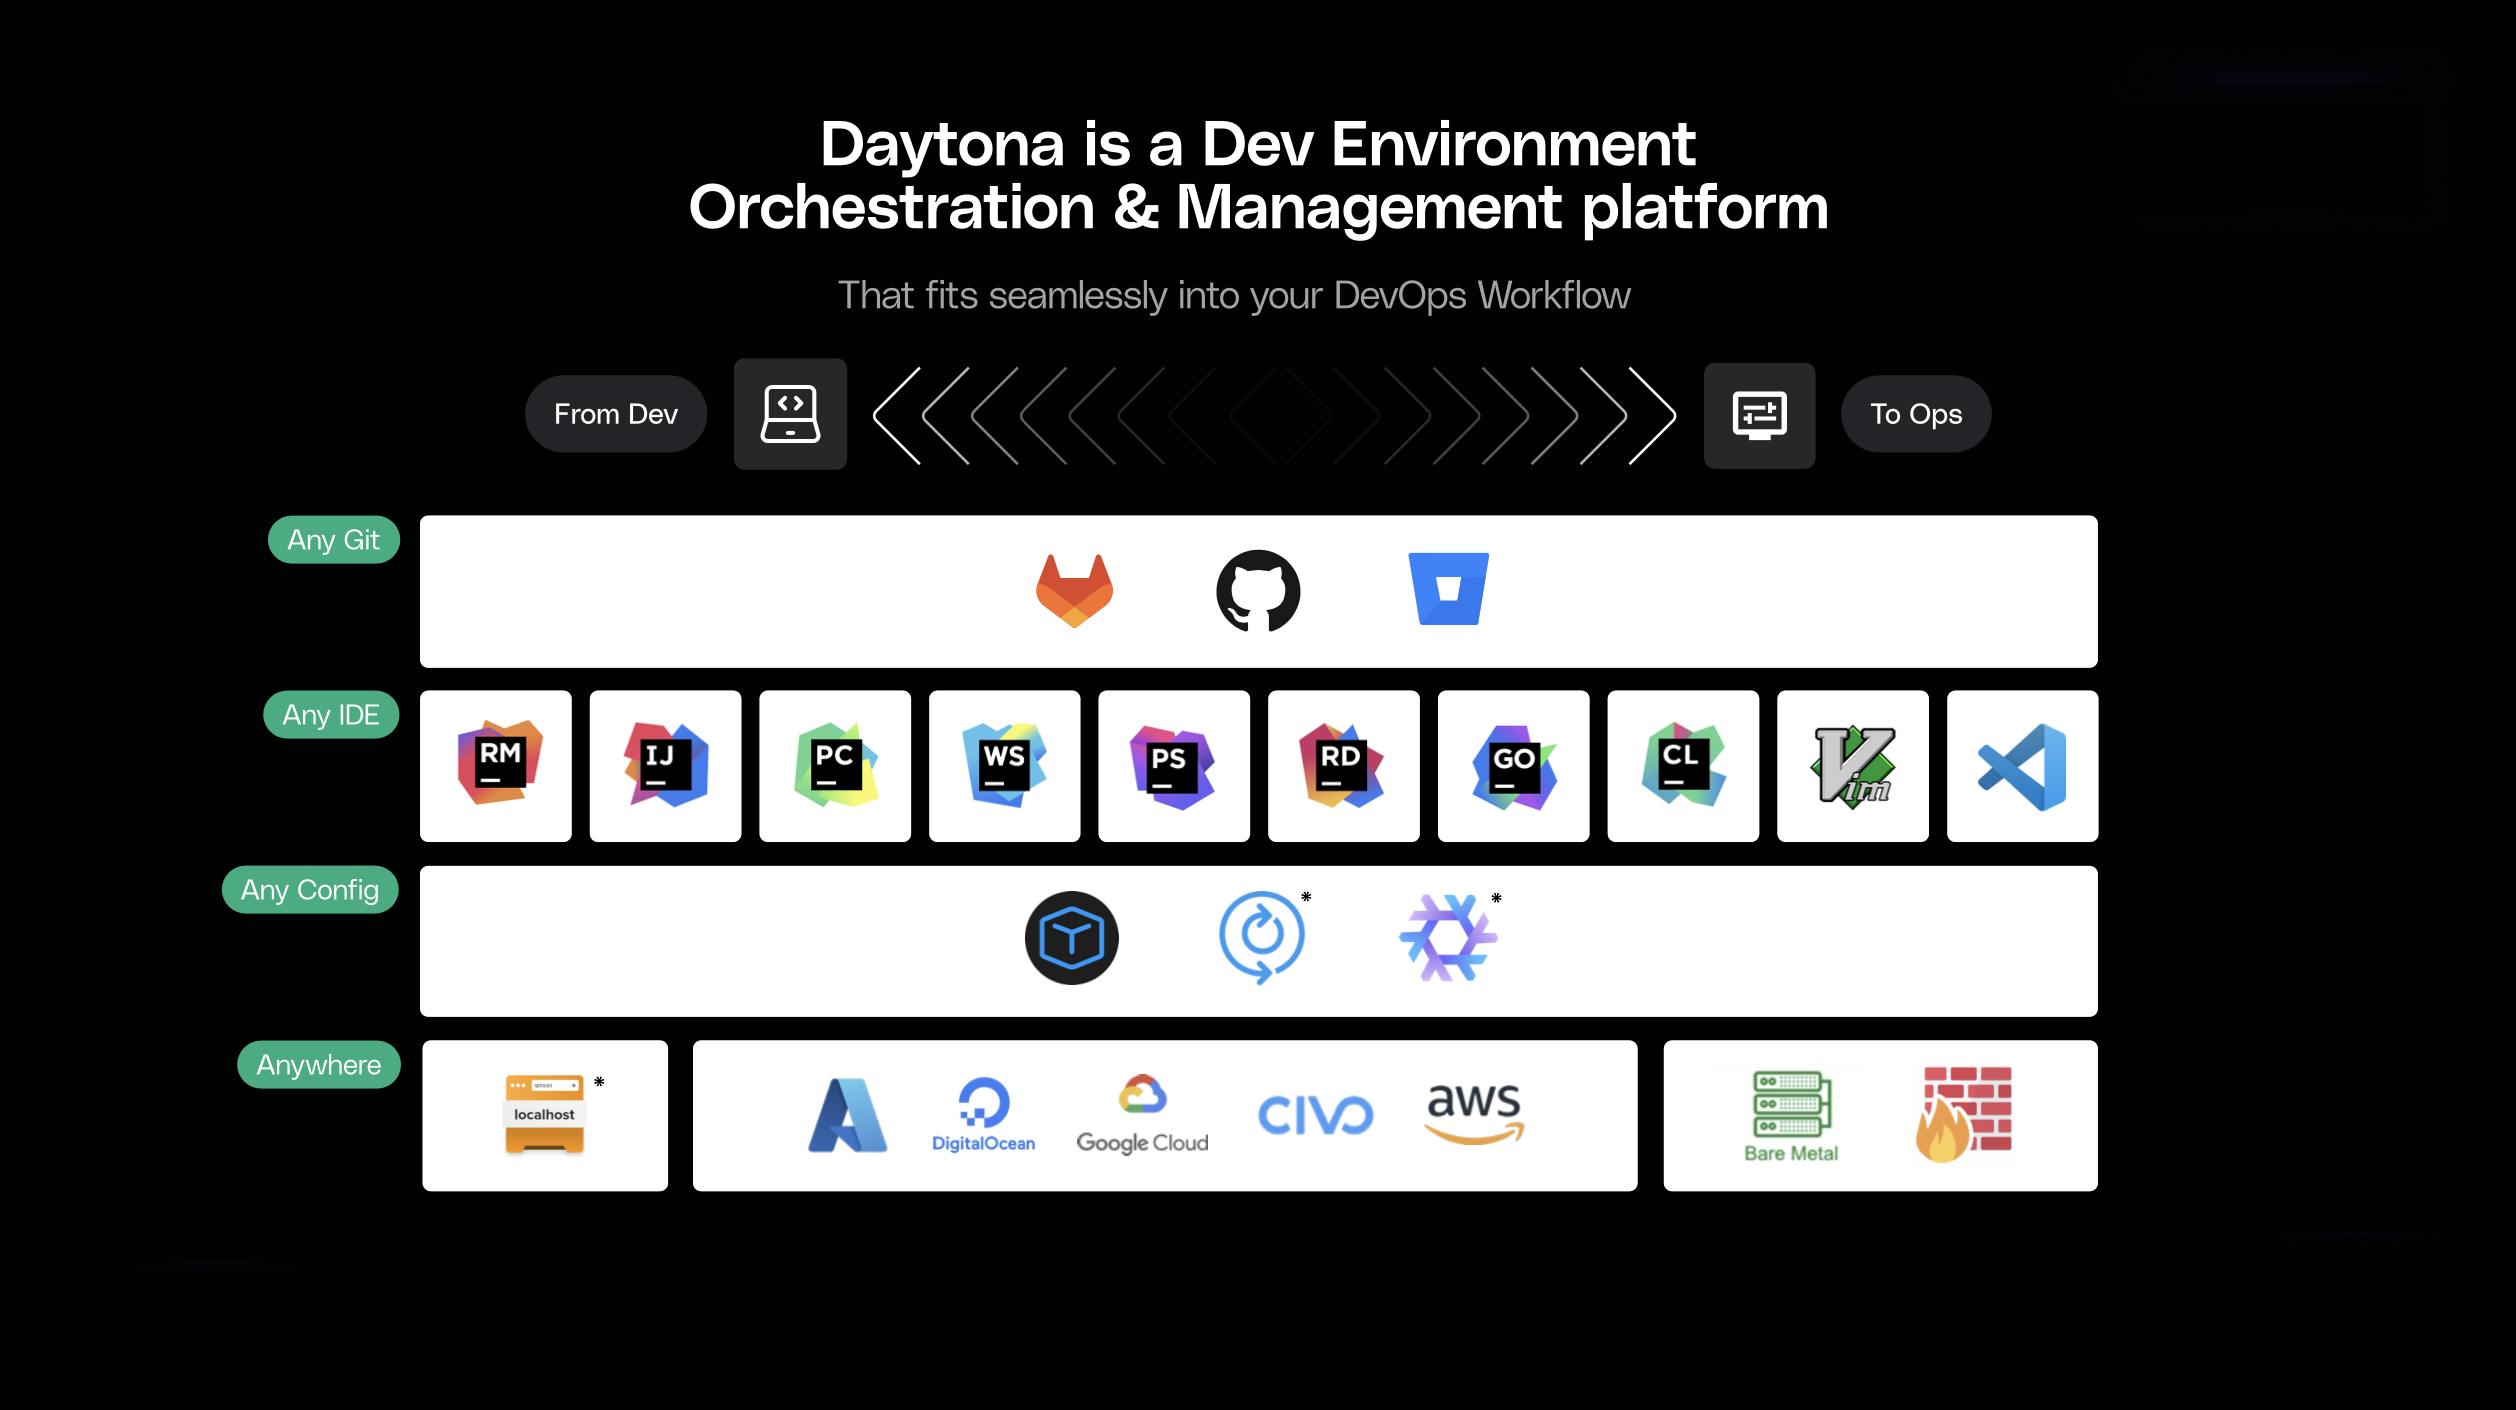 Daytona is a Dev Environment Orchestration and Management Platform